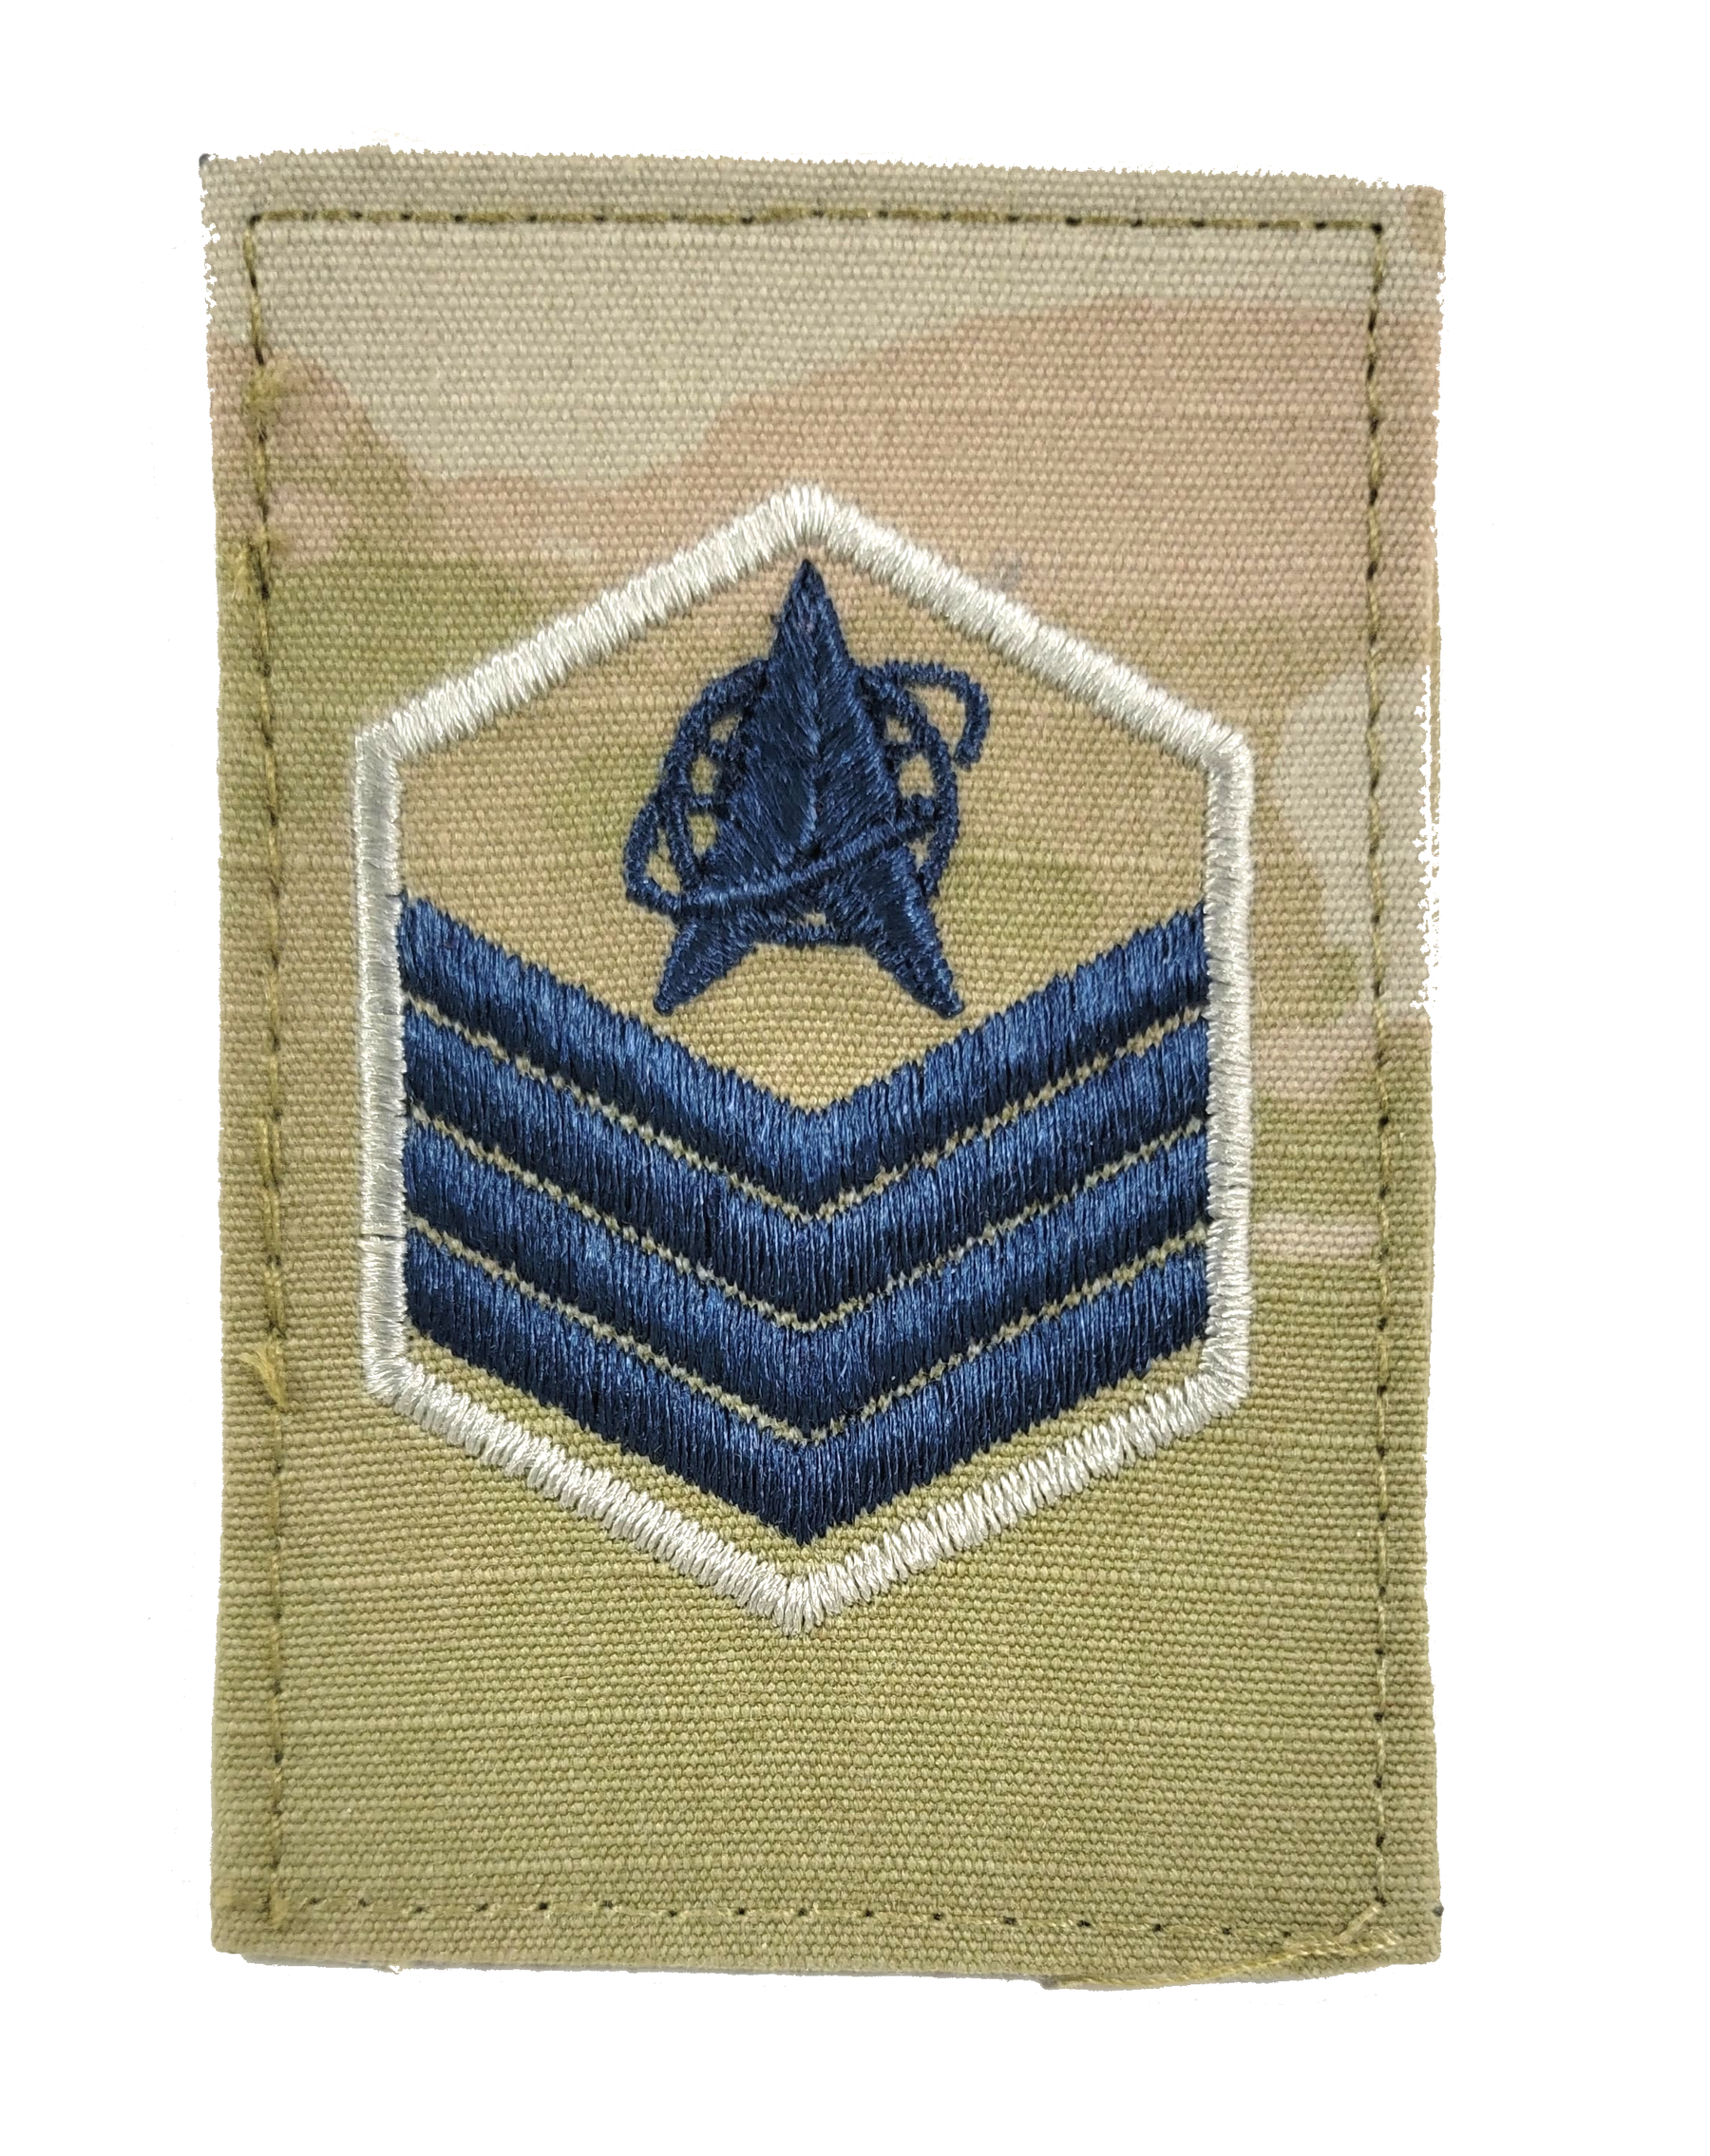 U.S. Space Force OCP Rank Tech Sergeant E6